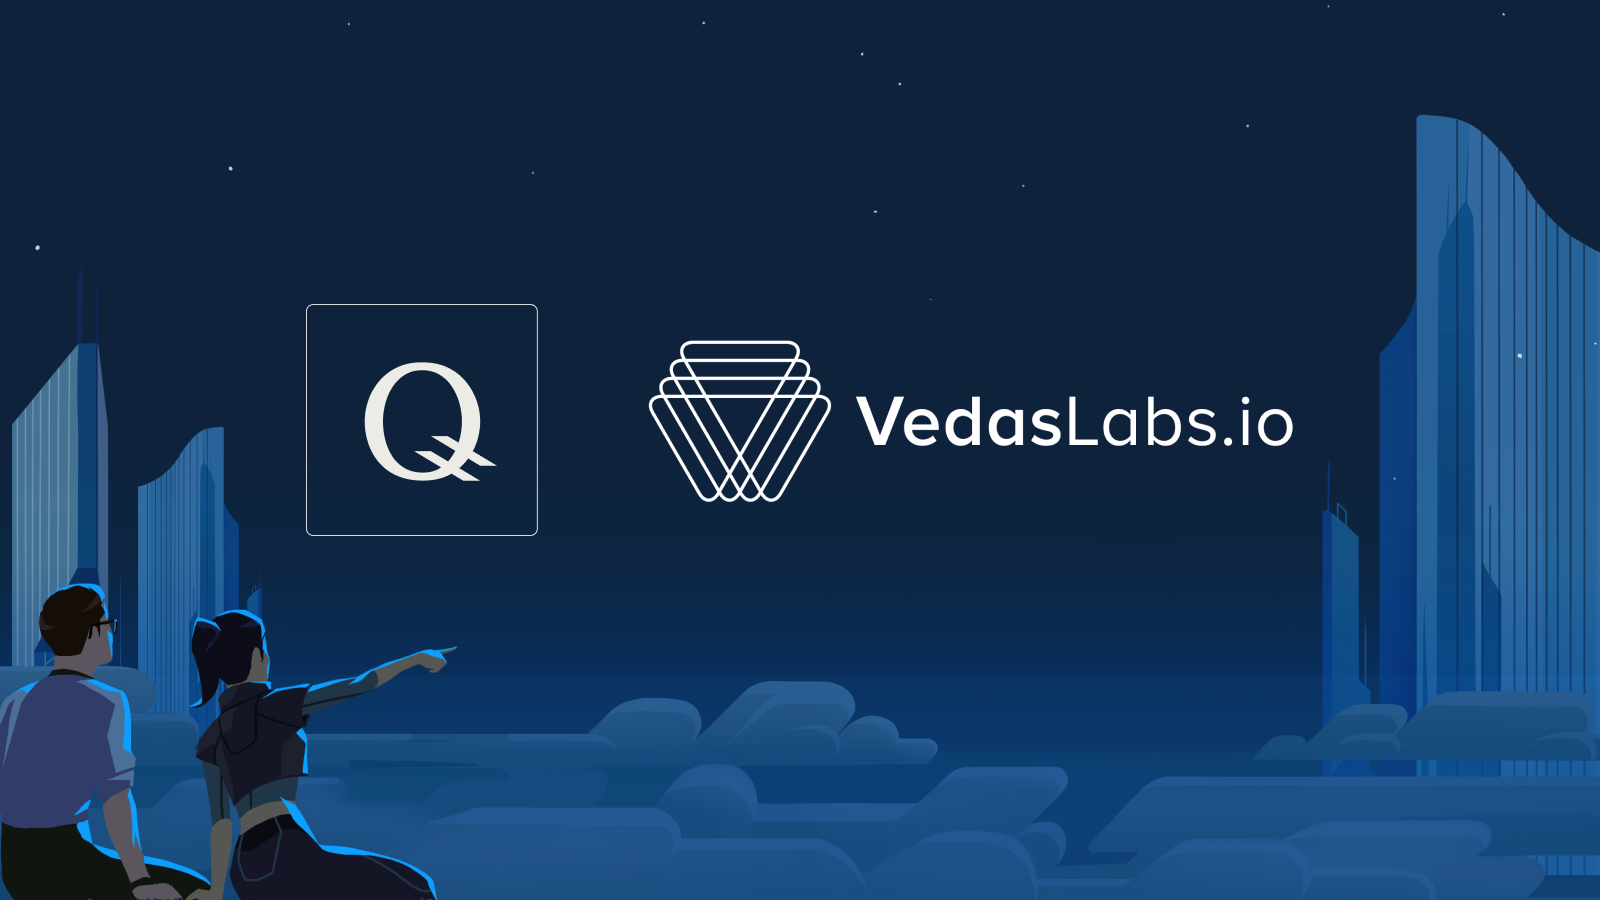 VedasLabs to Launch Innovative Crowdfunding Platform on Q Protocol